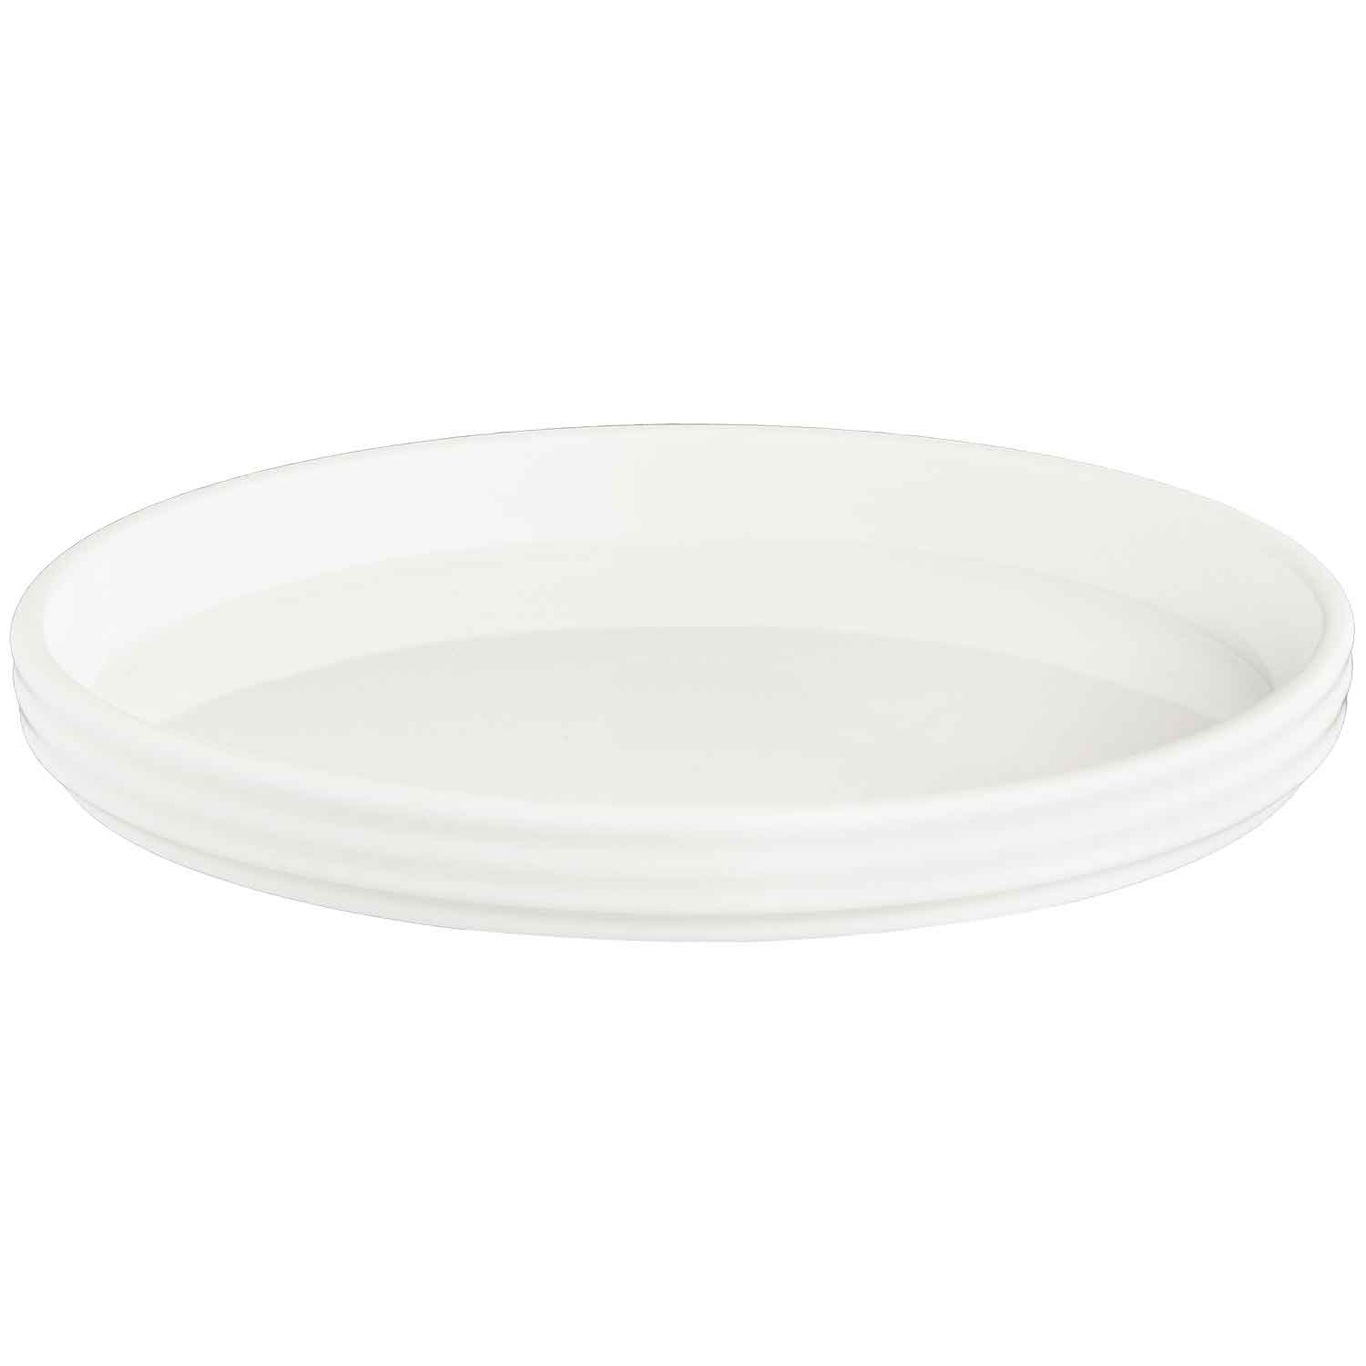 Ursula Plate White, 18 cm